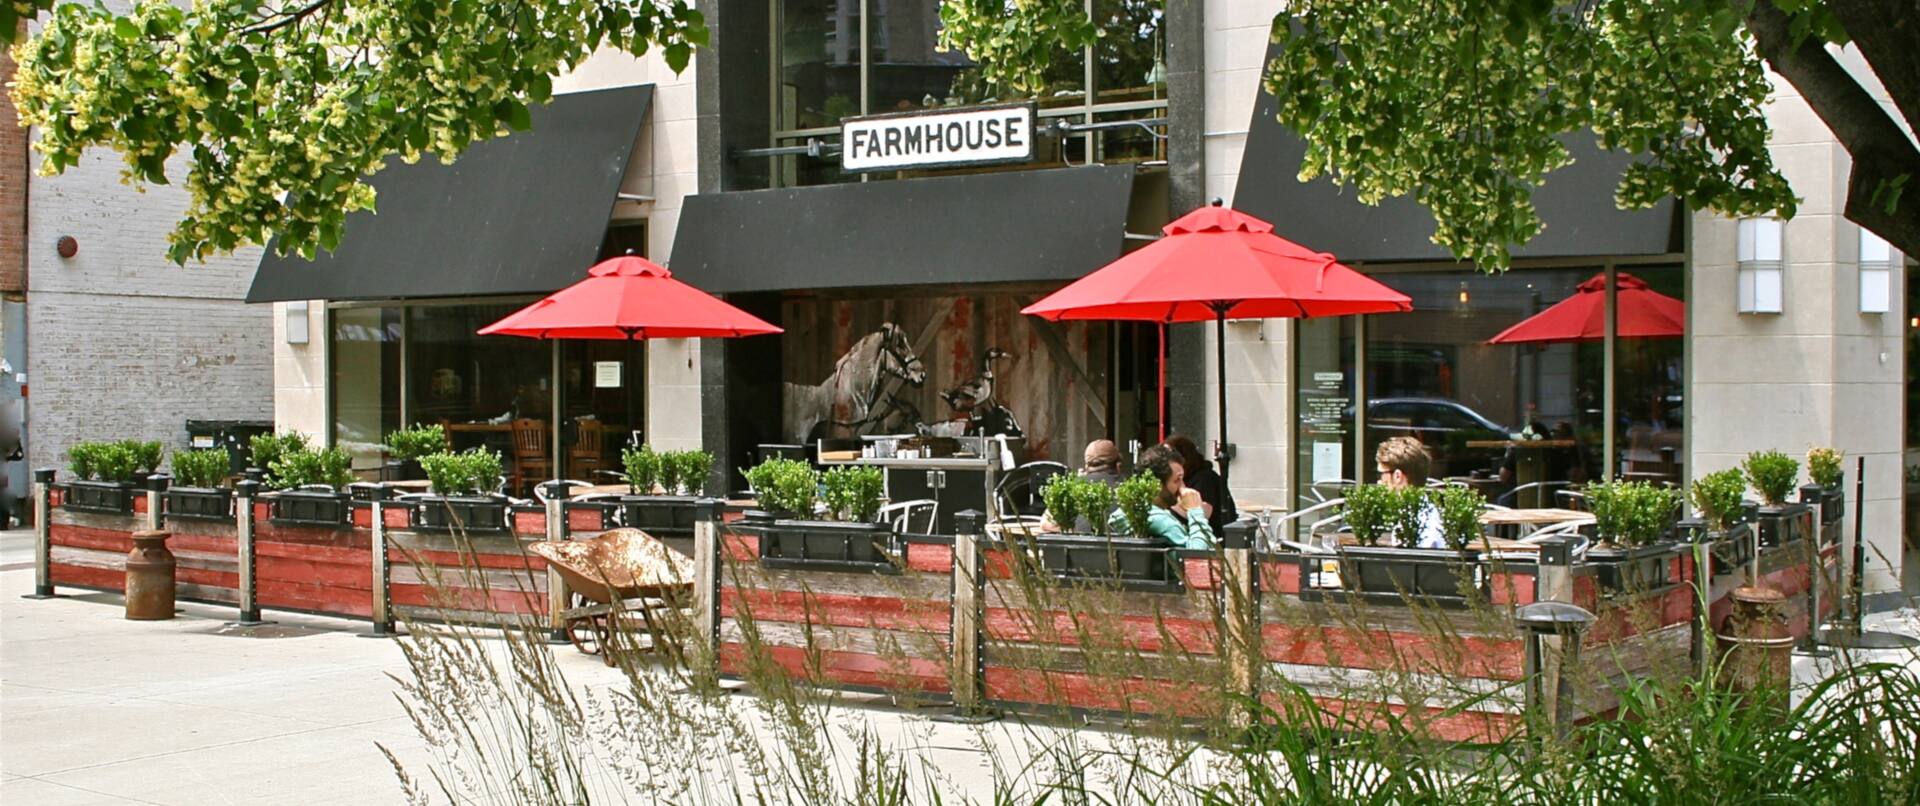 Farmhouse Restaurant with Outdoor Patio